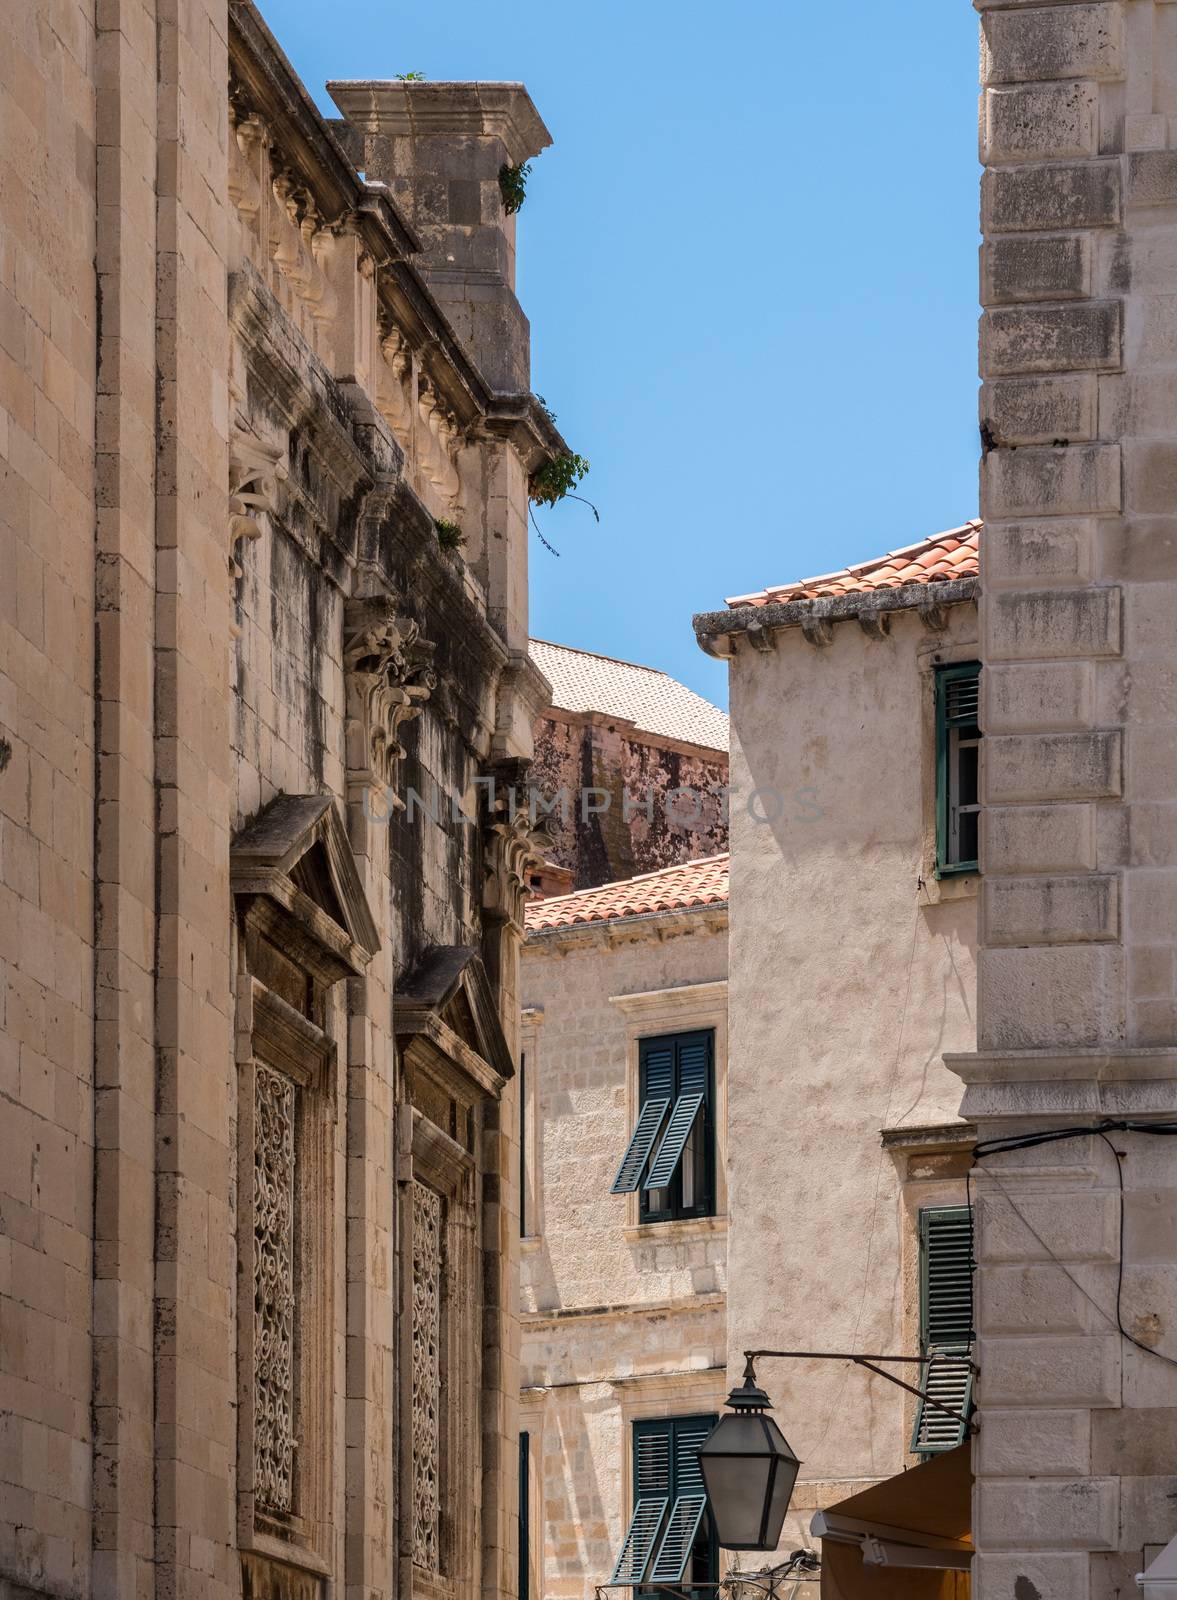 Narrow street in Dubrovnik old town by steheap